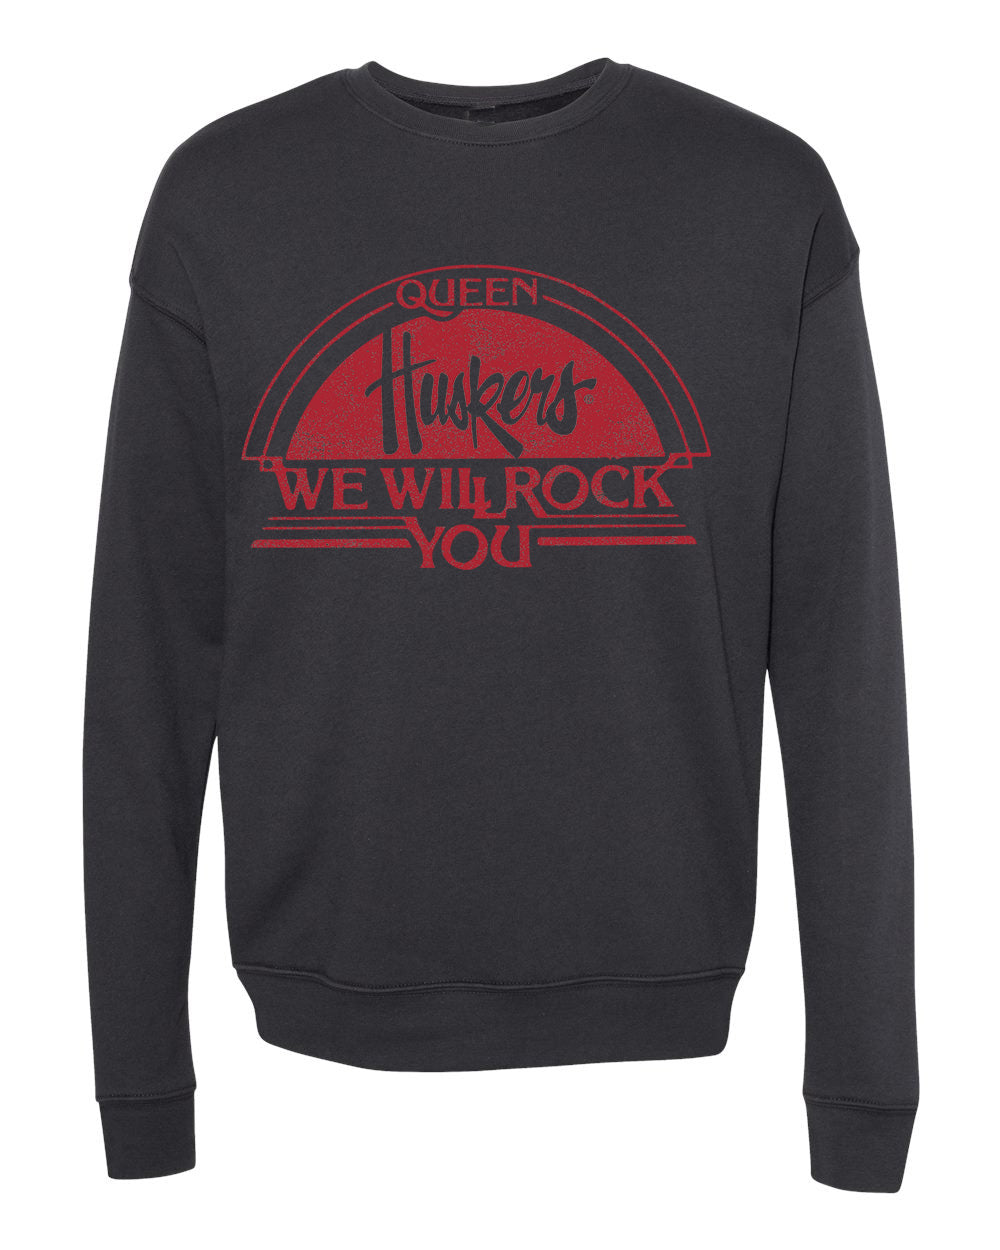 Queen Huskers Will Rock You Charcoal Thrifted Sweatshirt - shoplivylu